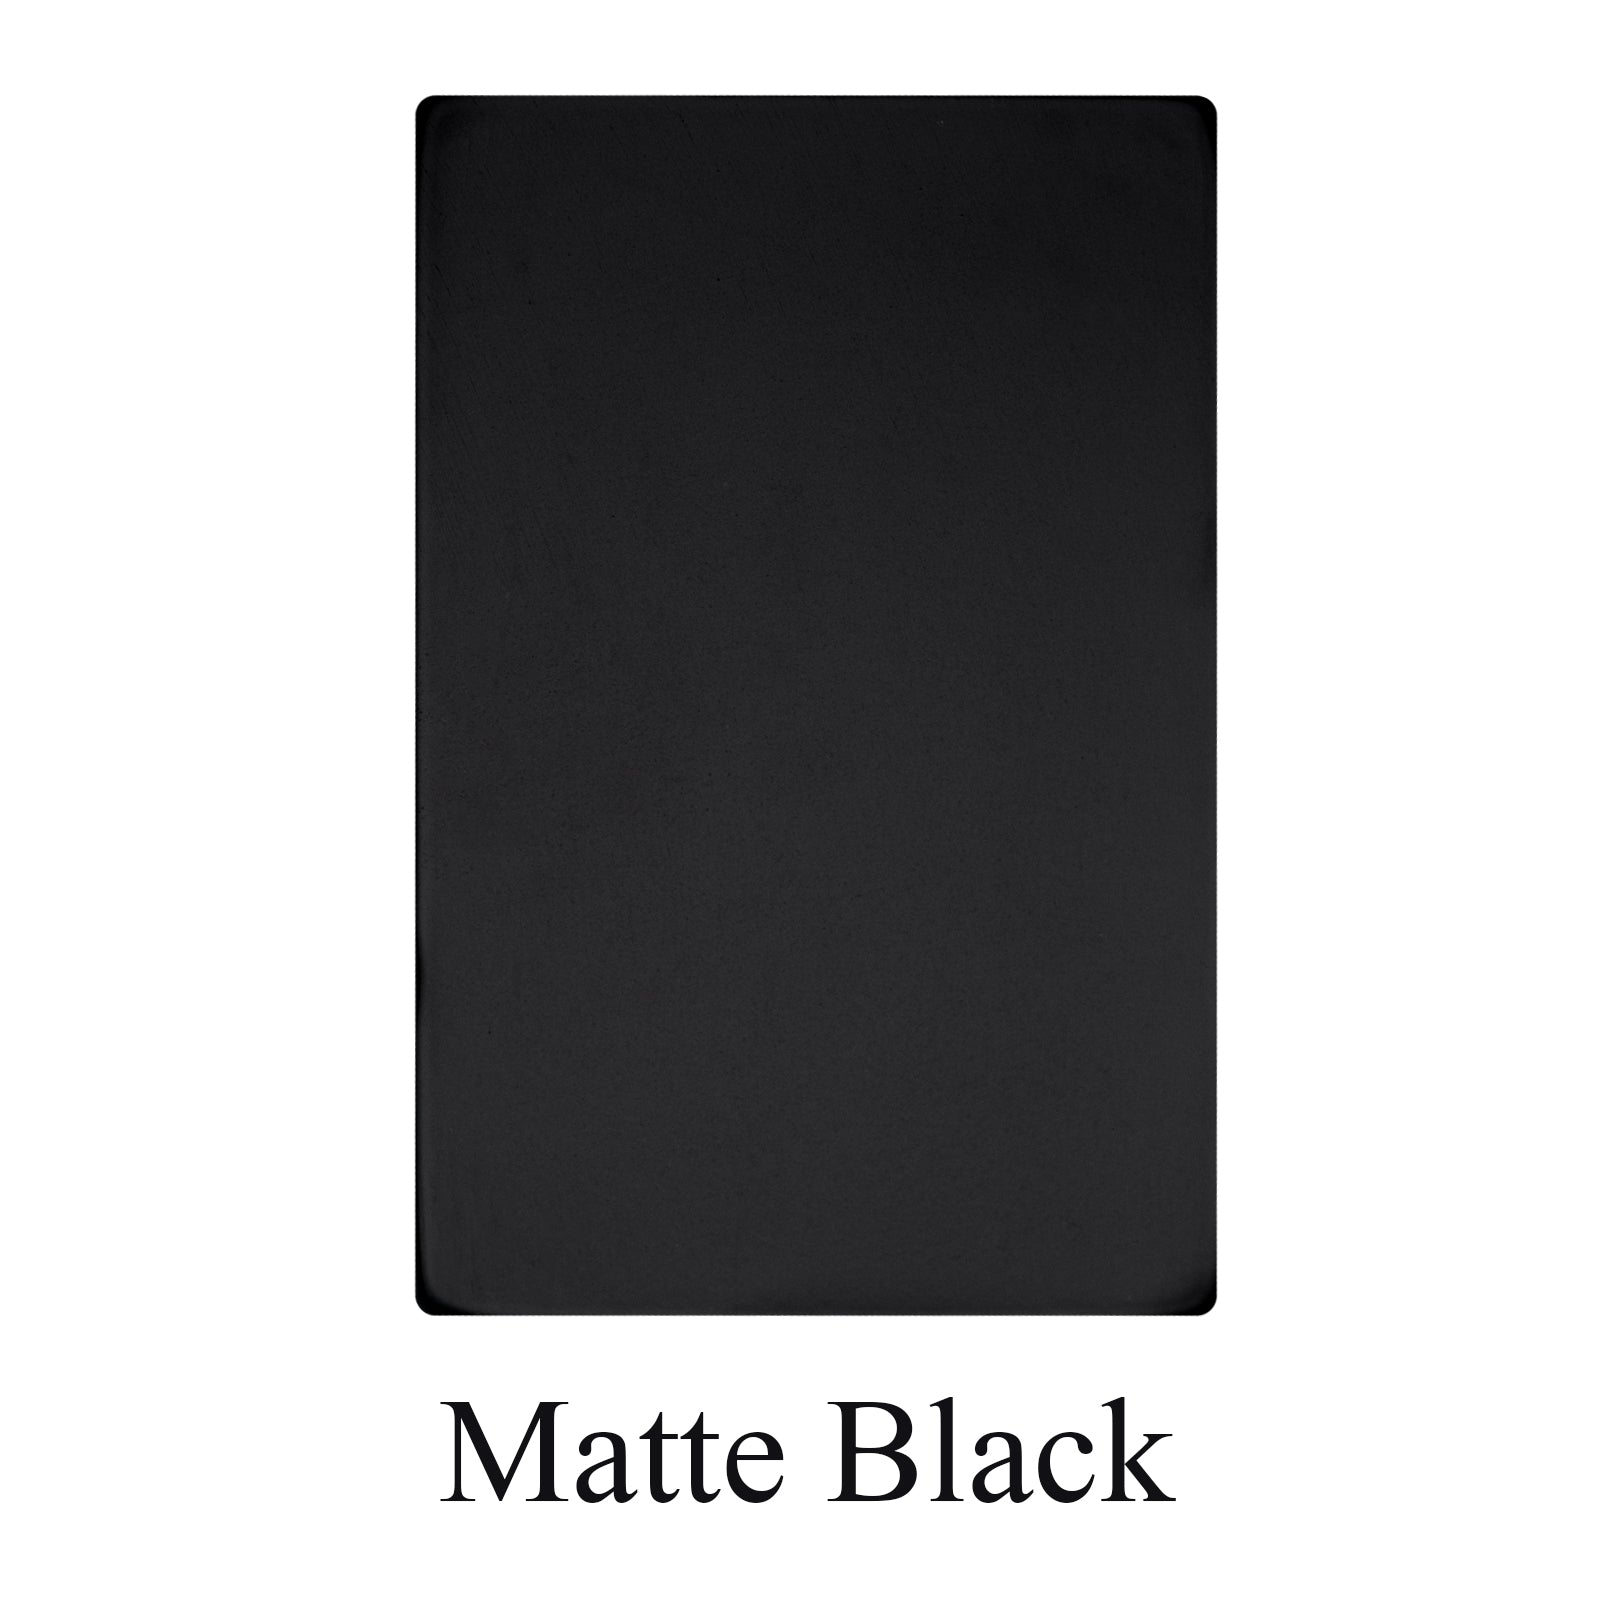 Akicon Matte Black Stainless Steel Sample